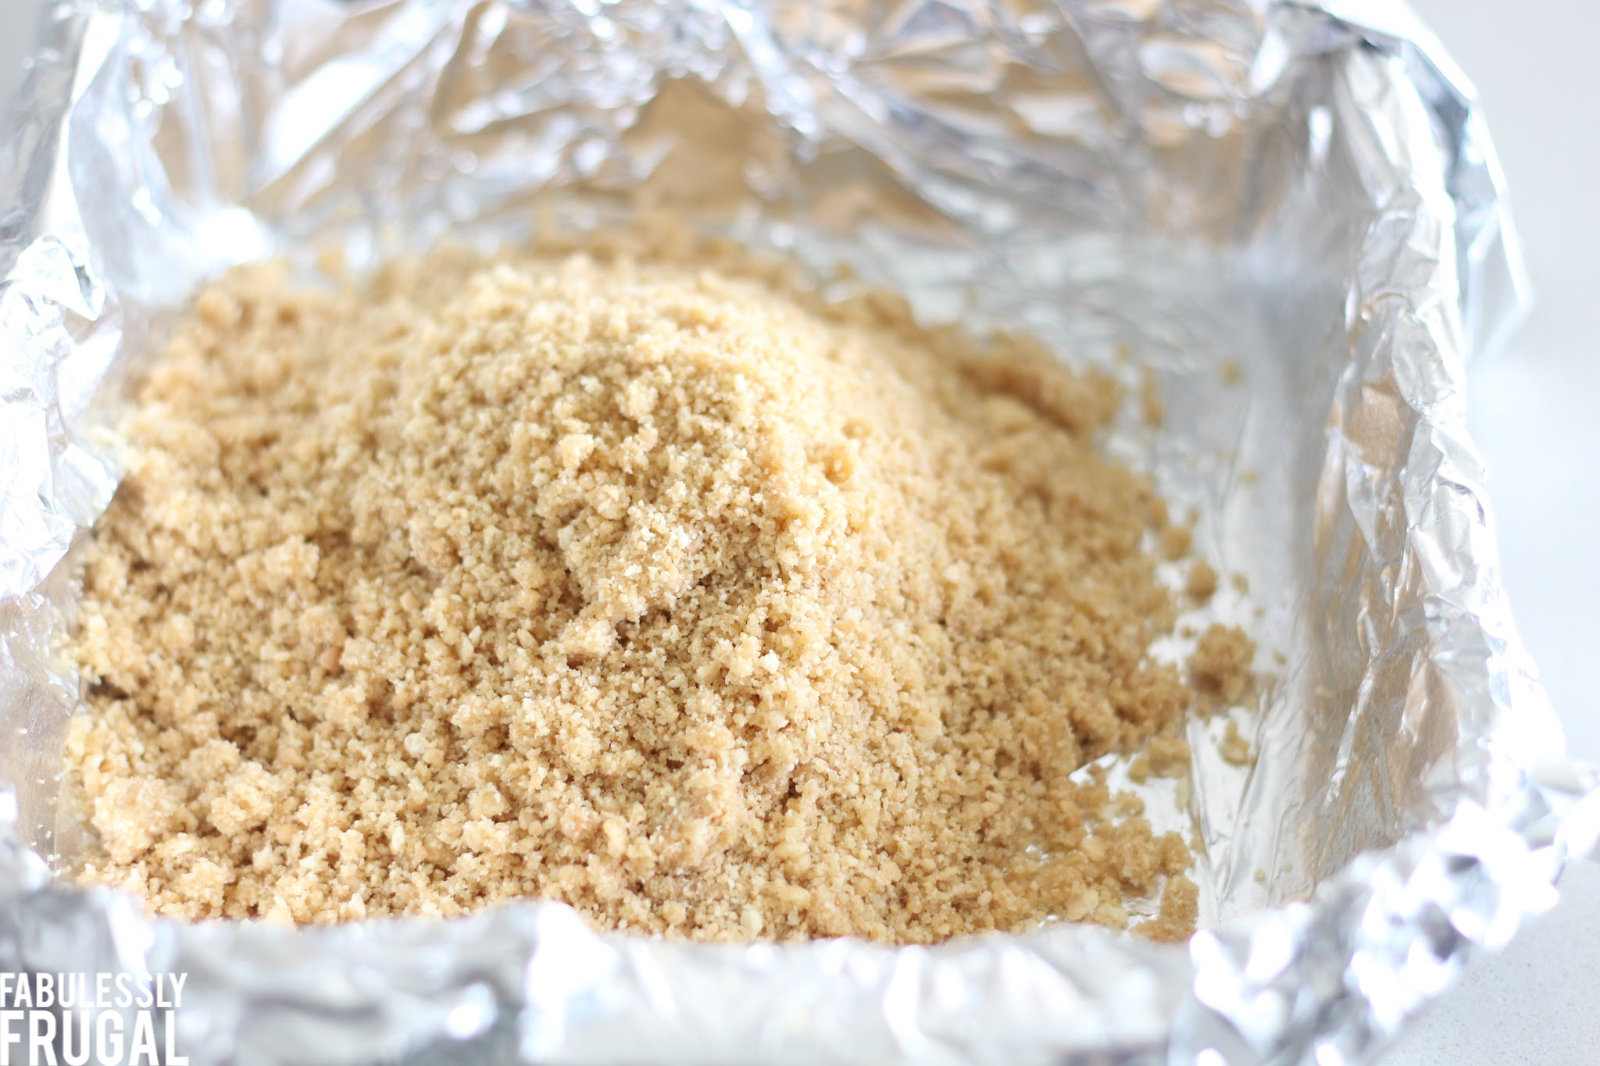 Animal cracker crust mixture in baking pan